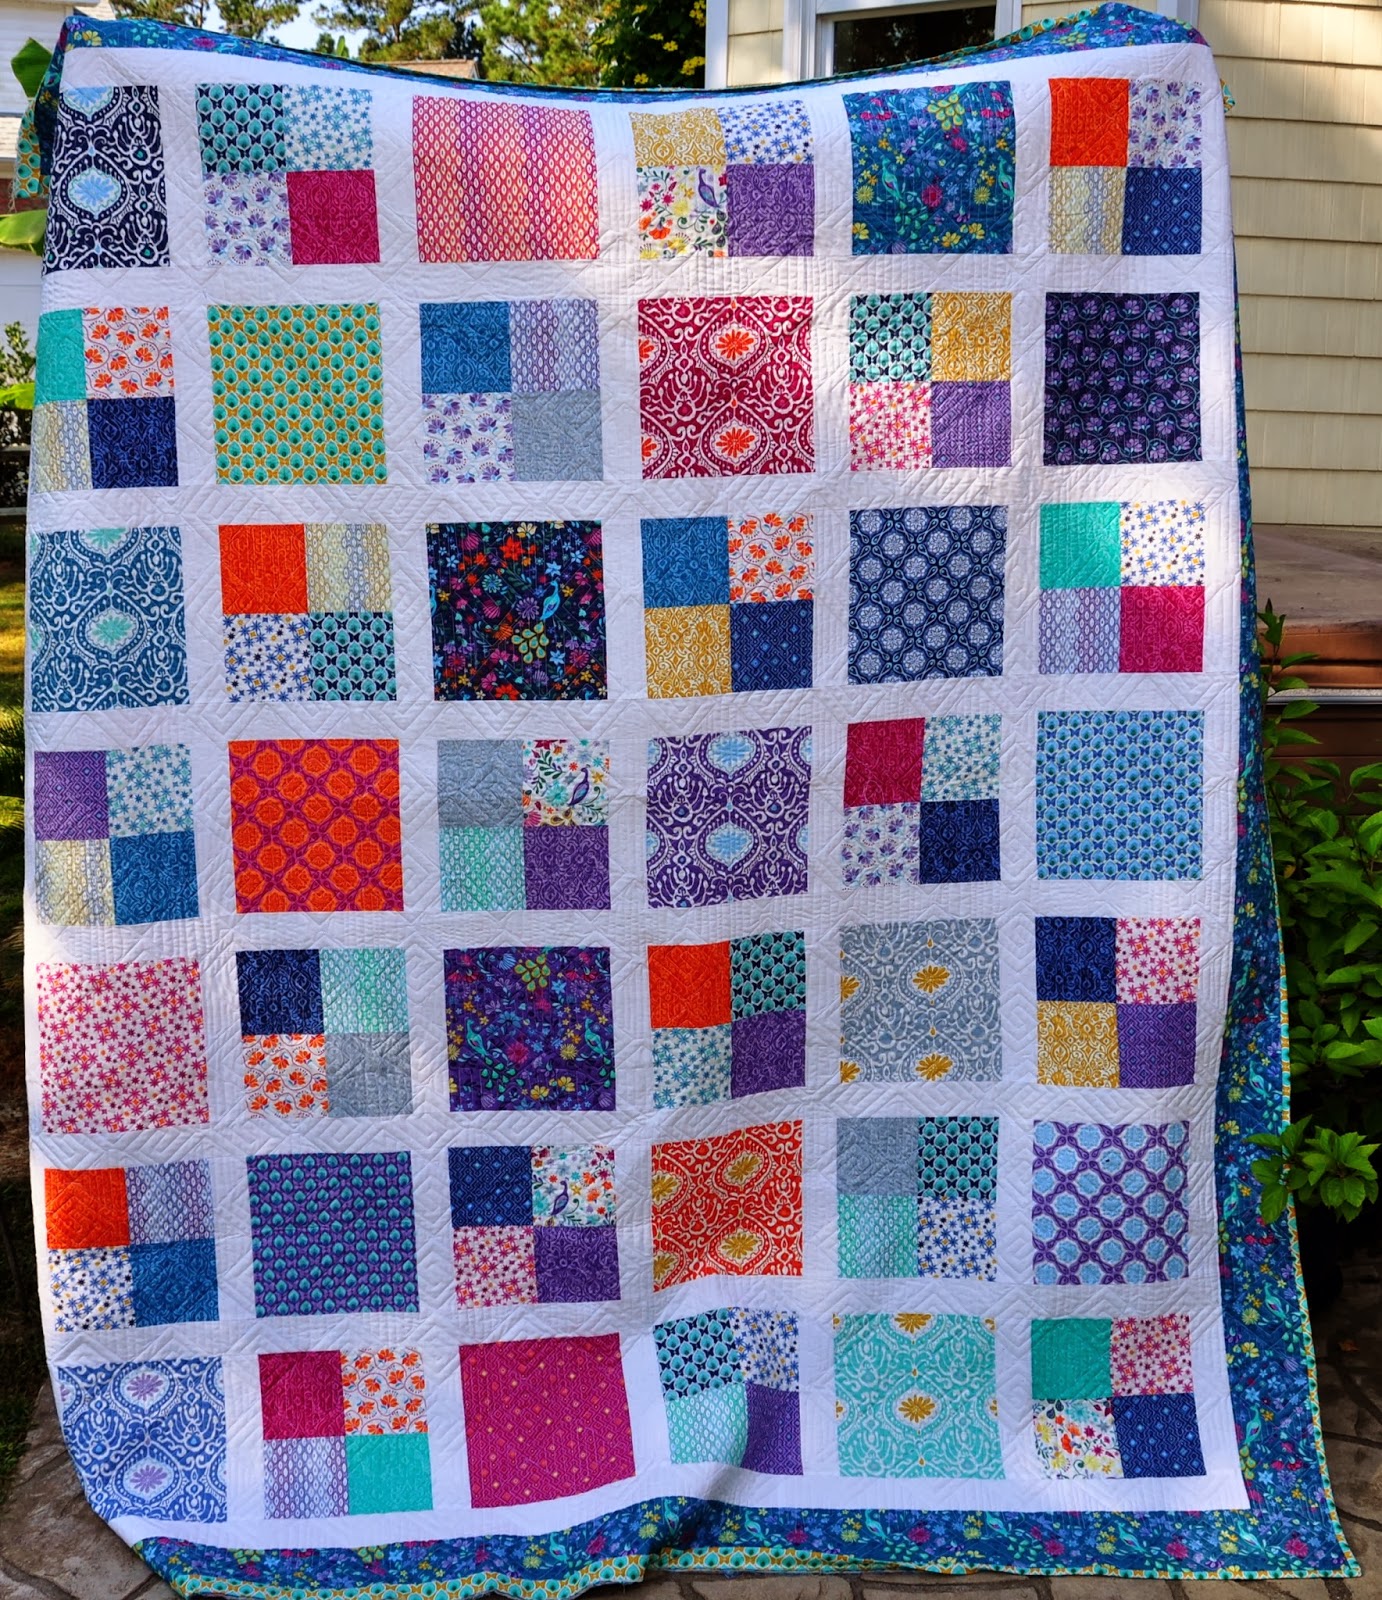 Quilt Square Patterns Free Quilt Block Patterns For A Sampler Quilt ...